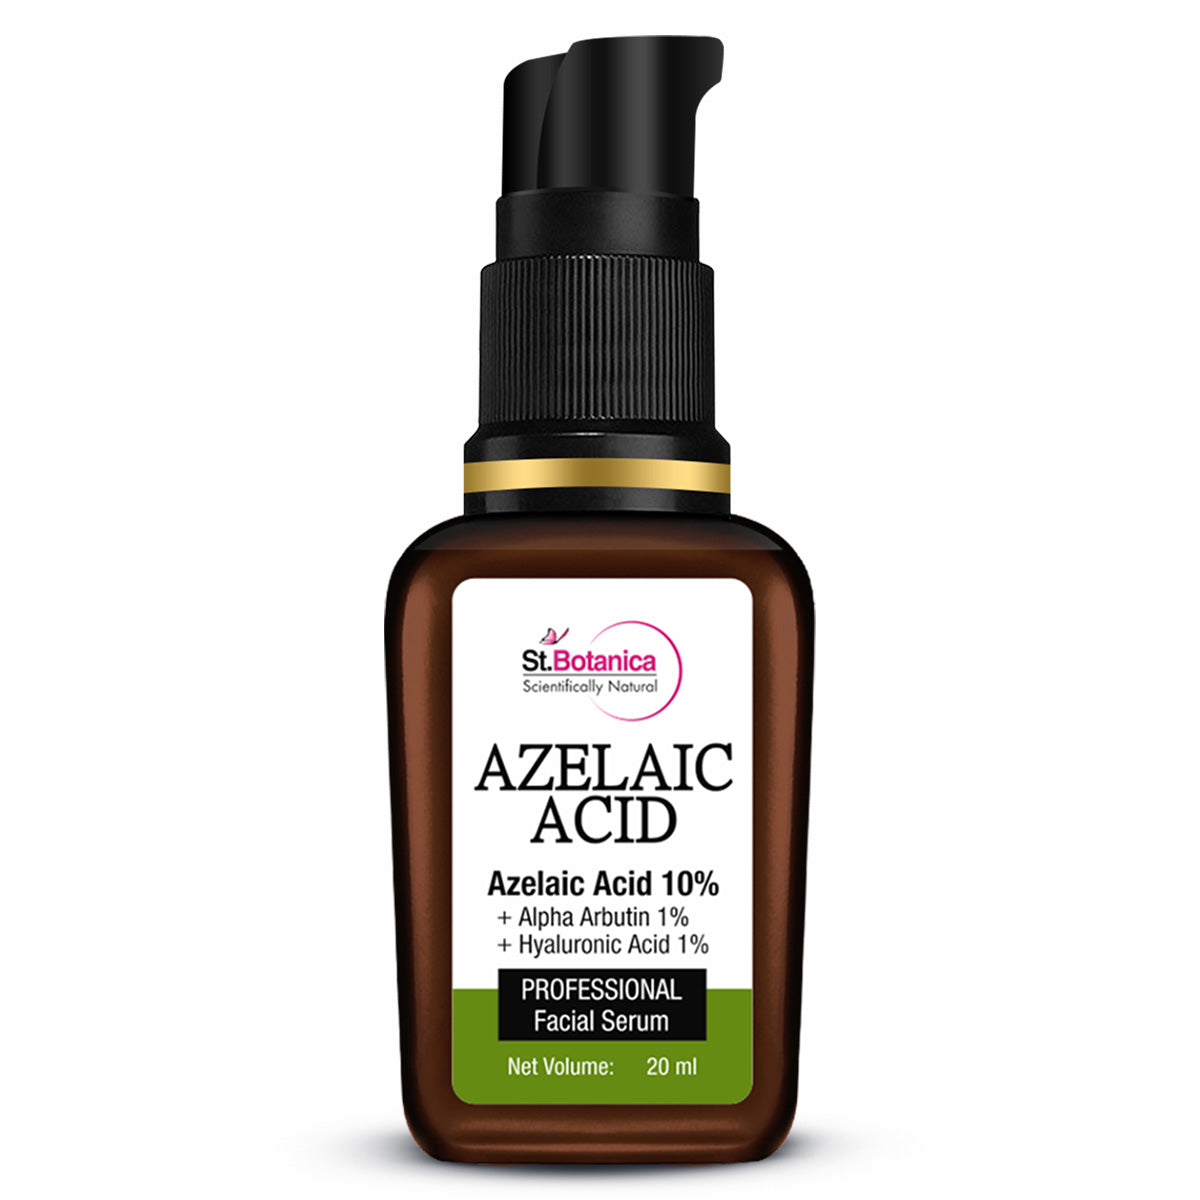 St.Botanica Azelaic Acid 10% + Alpha Arbutin 1% + Hyaluronic Acid 1% Face Serum for Pigmentation, Dark Spots & Uneven Skin Tone, 20 ml